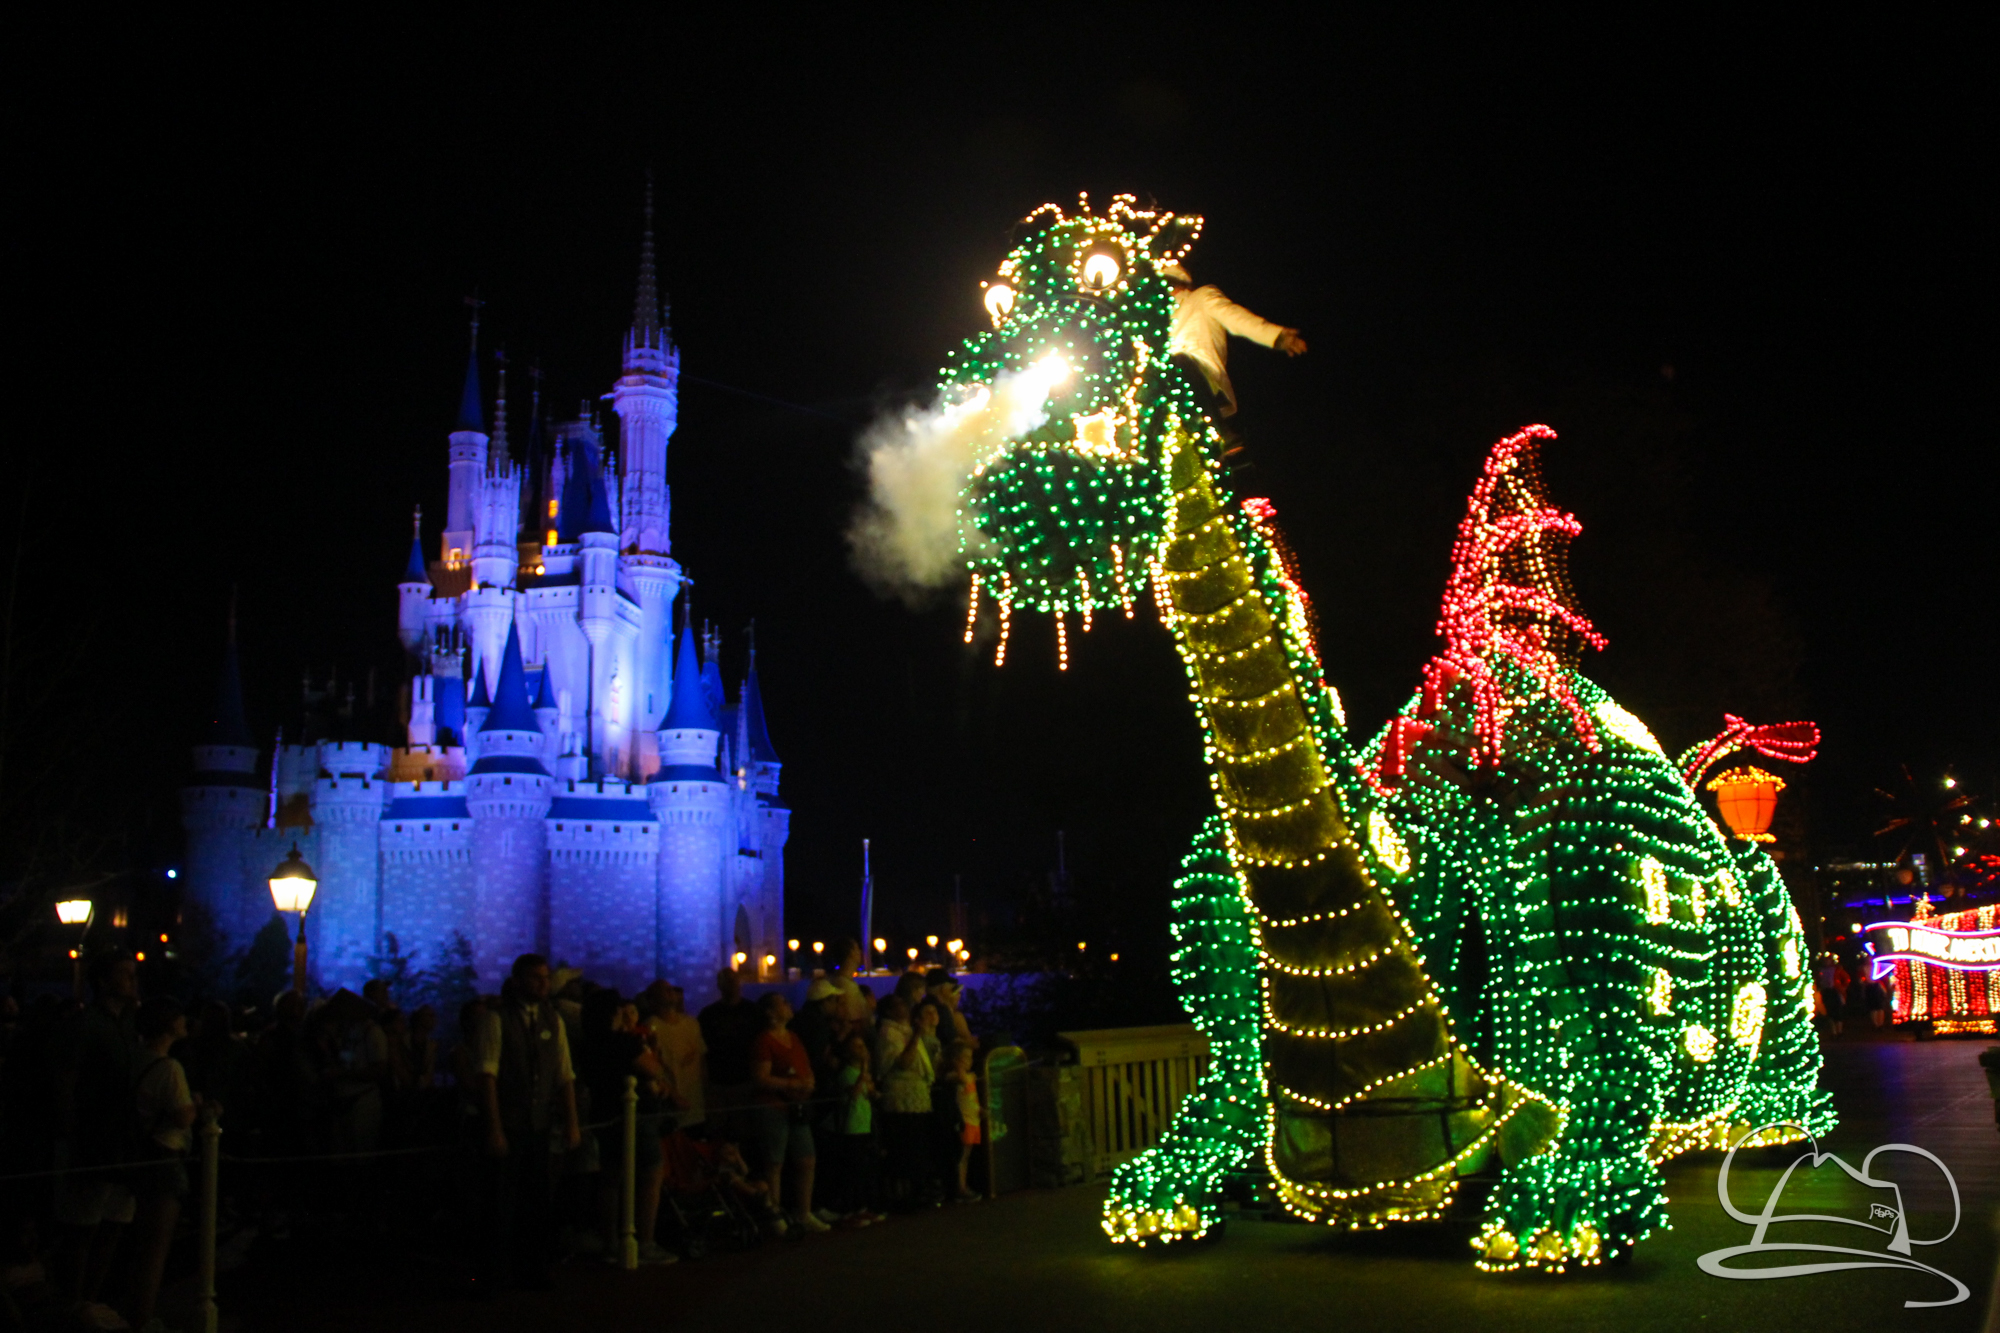 Mr. DAPs Goes to Walt Disney World – A Magical Day at the Magic Kingdom